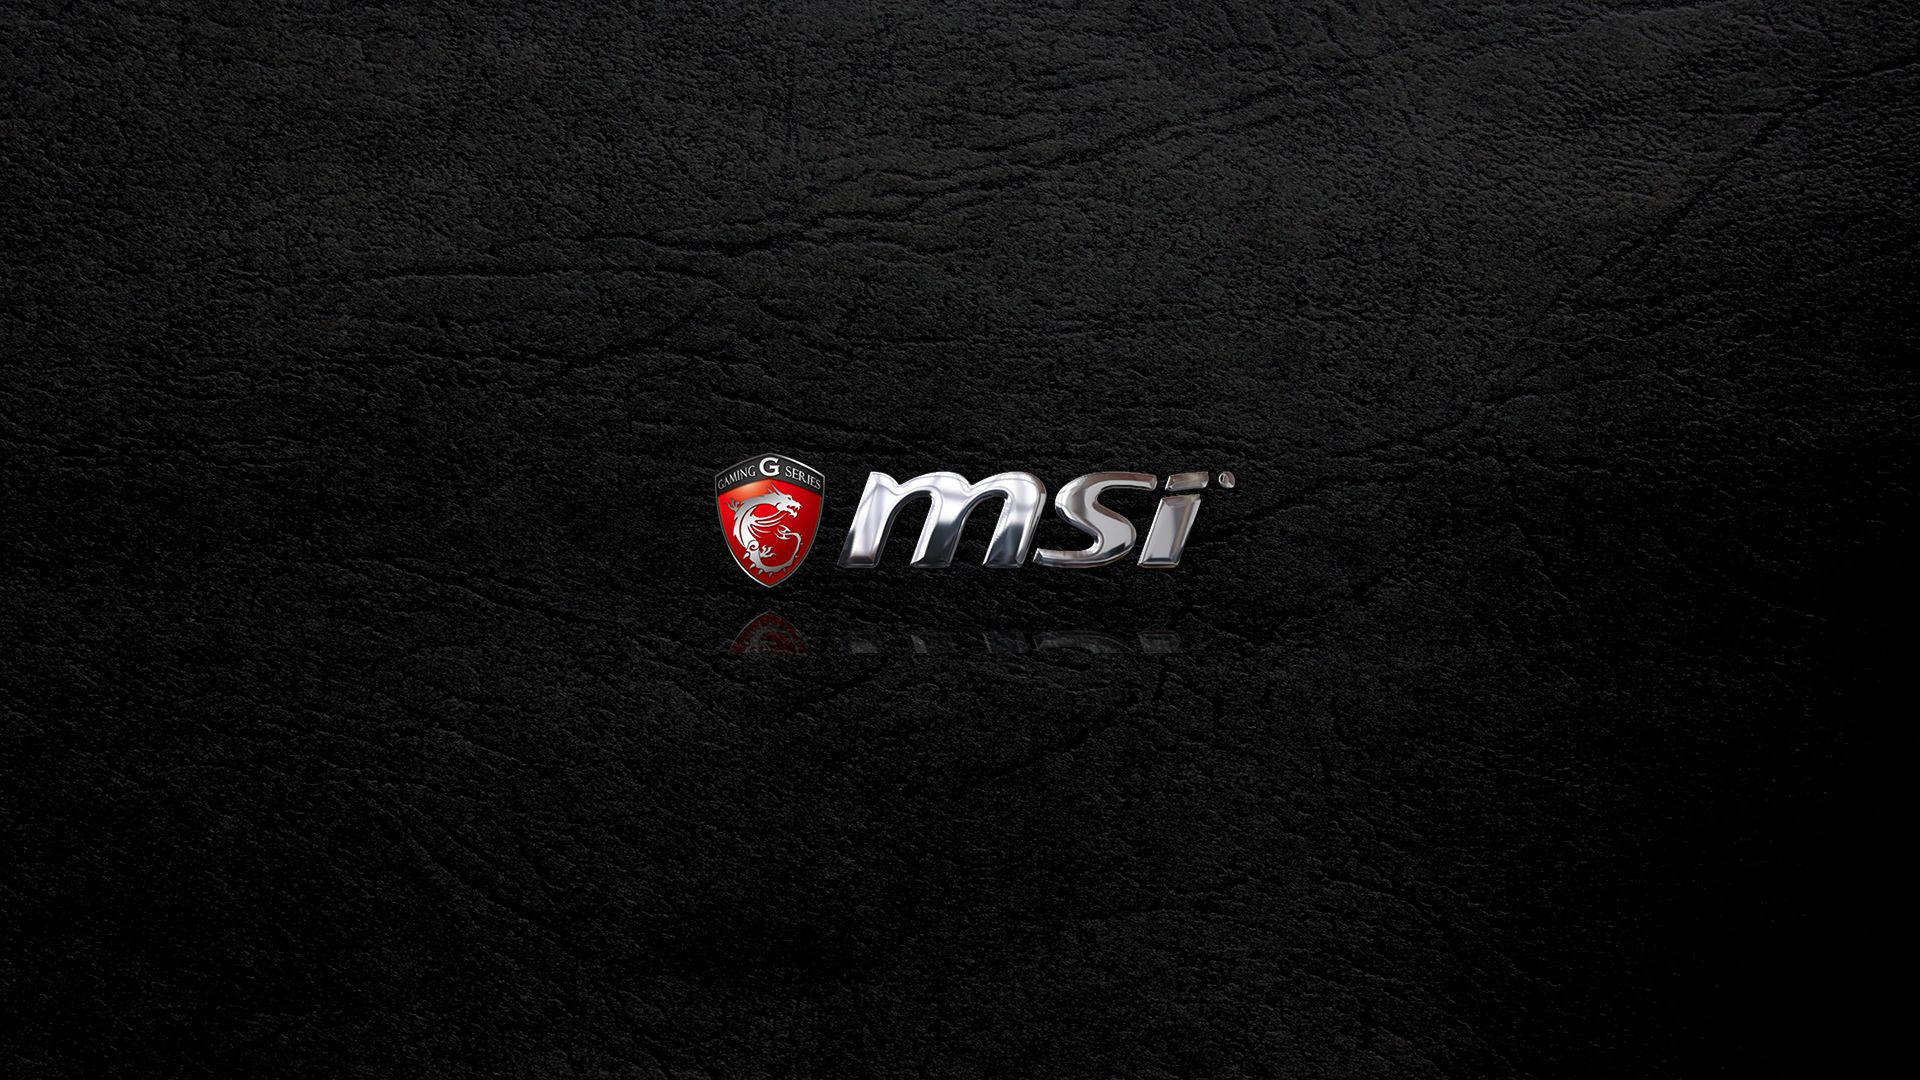 Msi G Series Logo On Black Leather Background